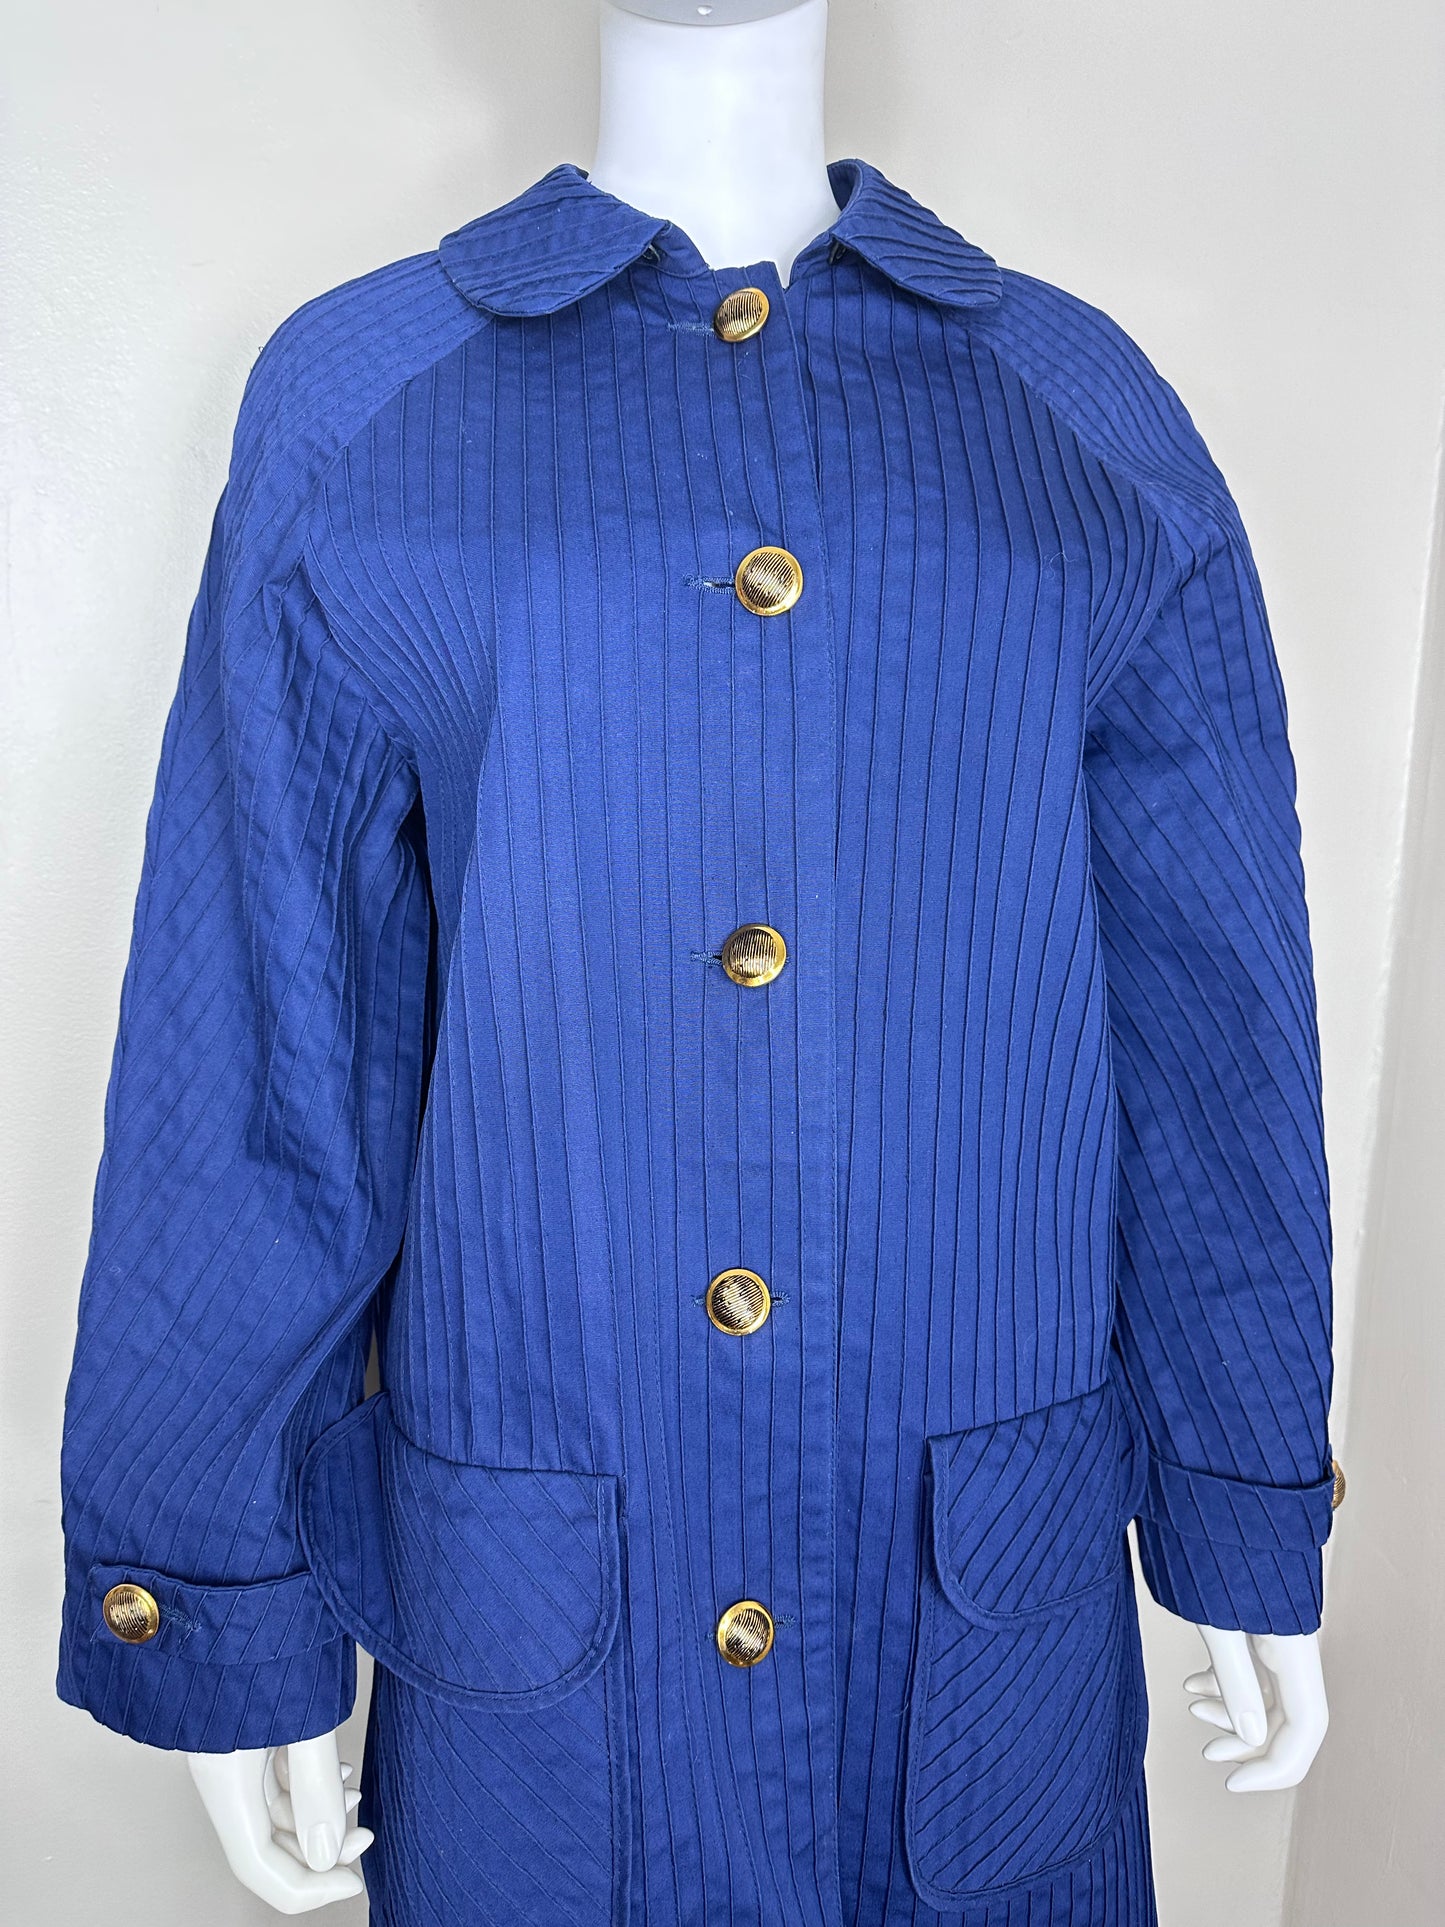 1970s Blue Pintuck Coat, J.C. Penney Size Medium